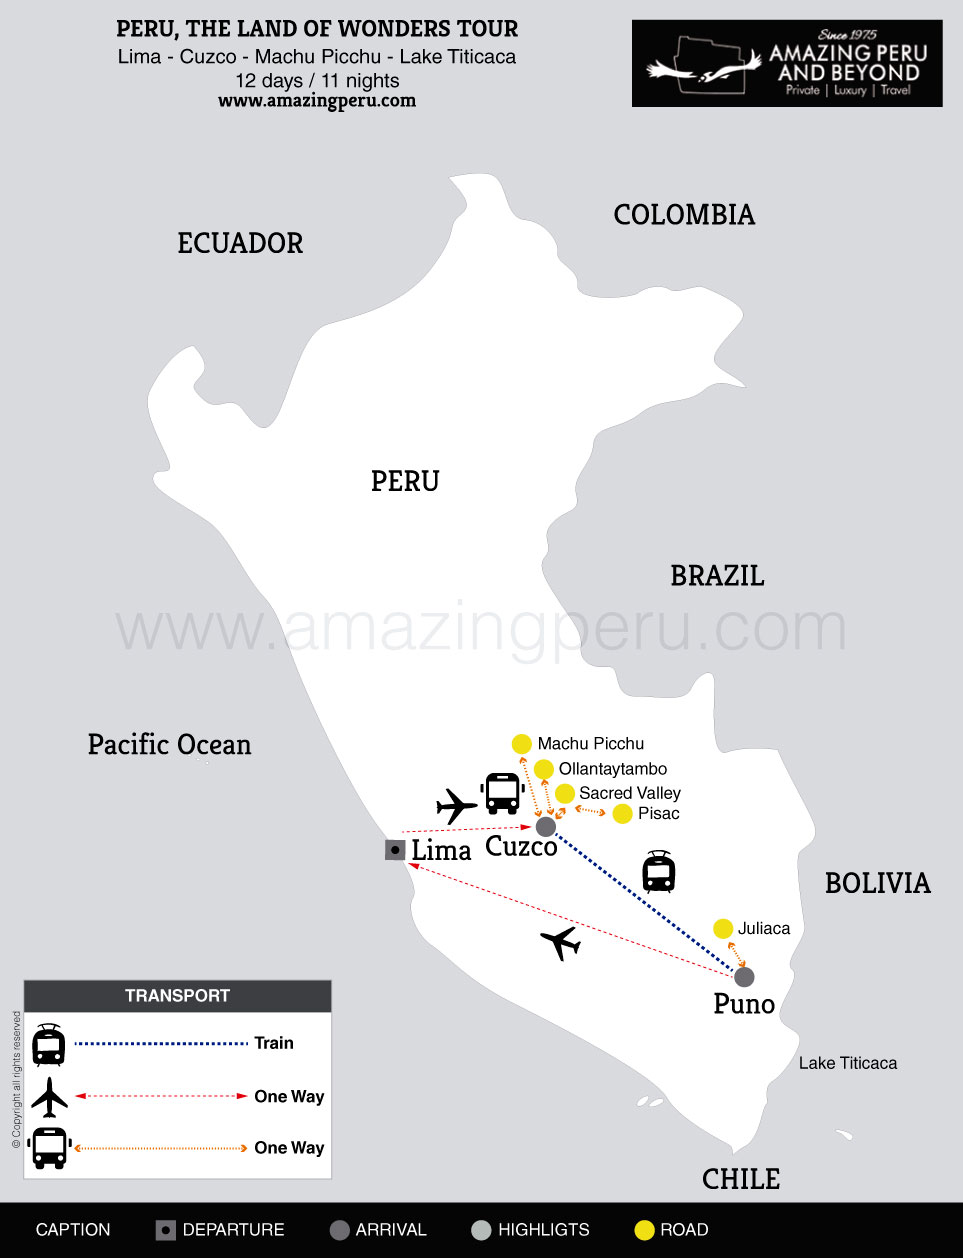 2022 Peru, the Land of wonders tour - 12 days / 11 nights.